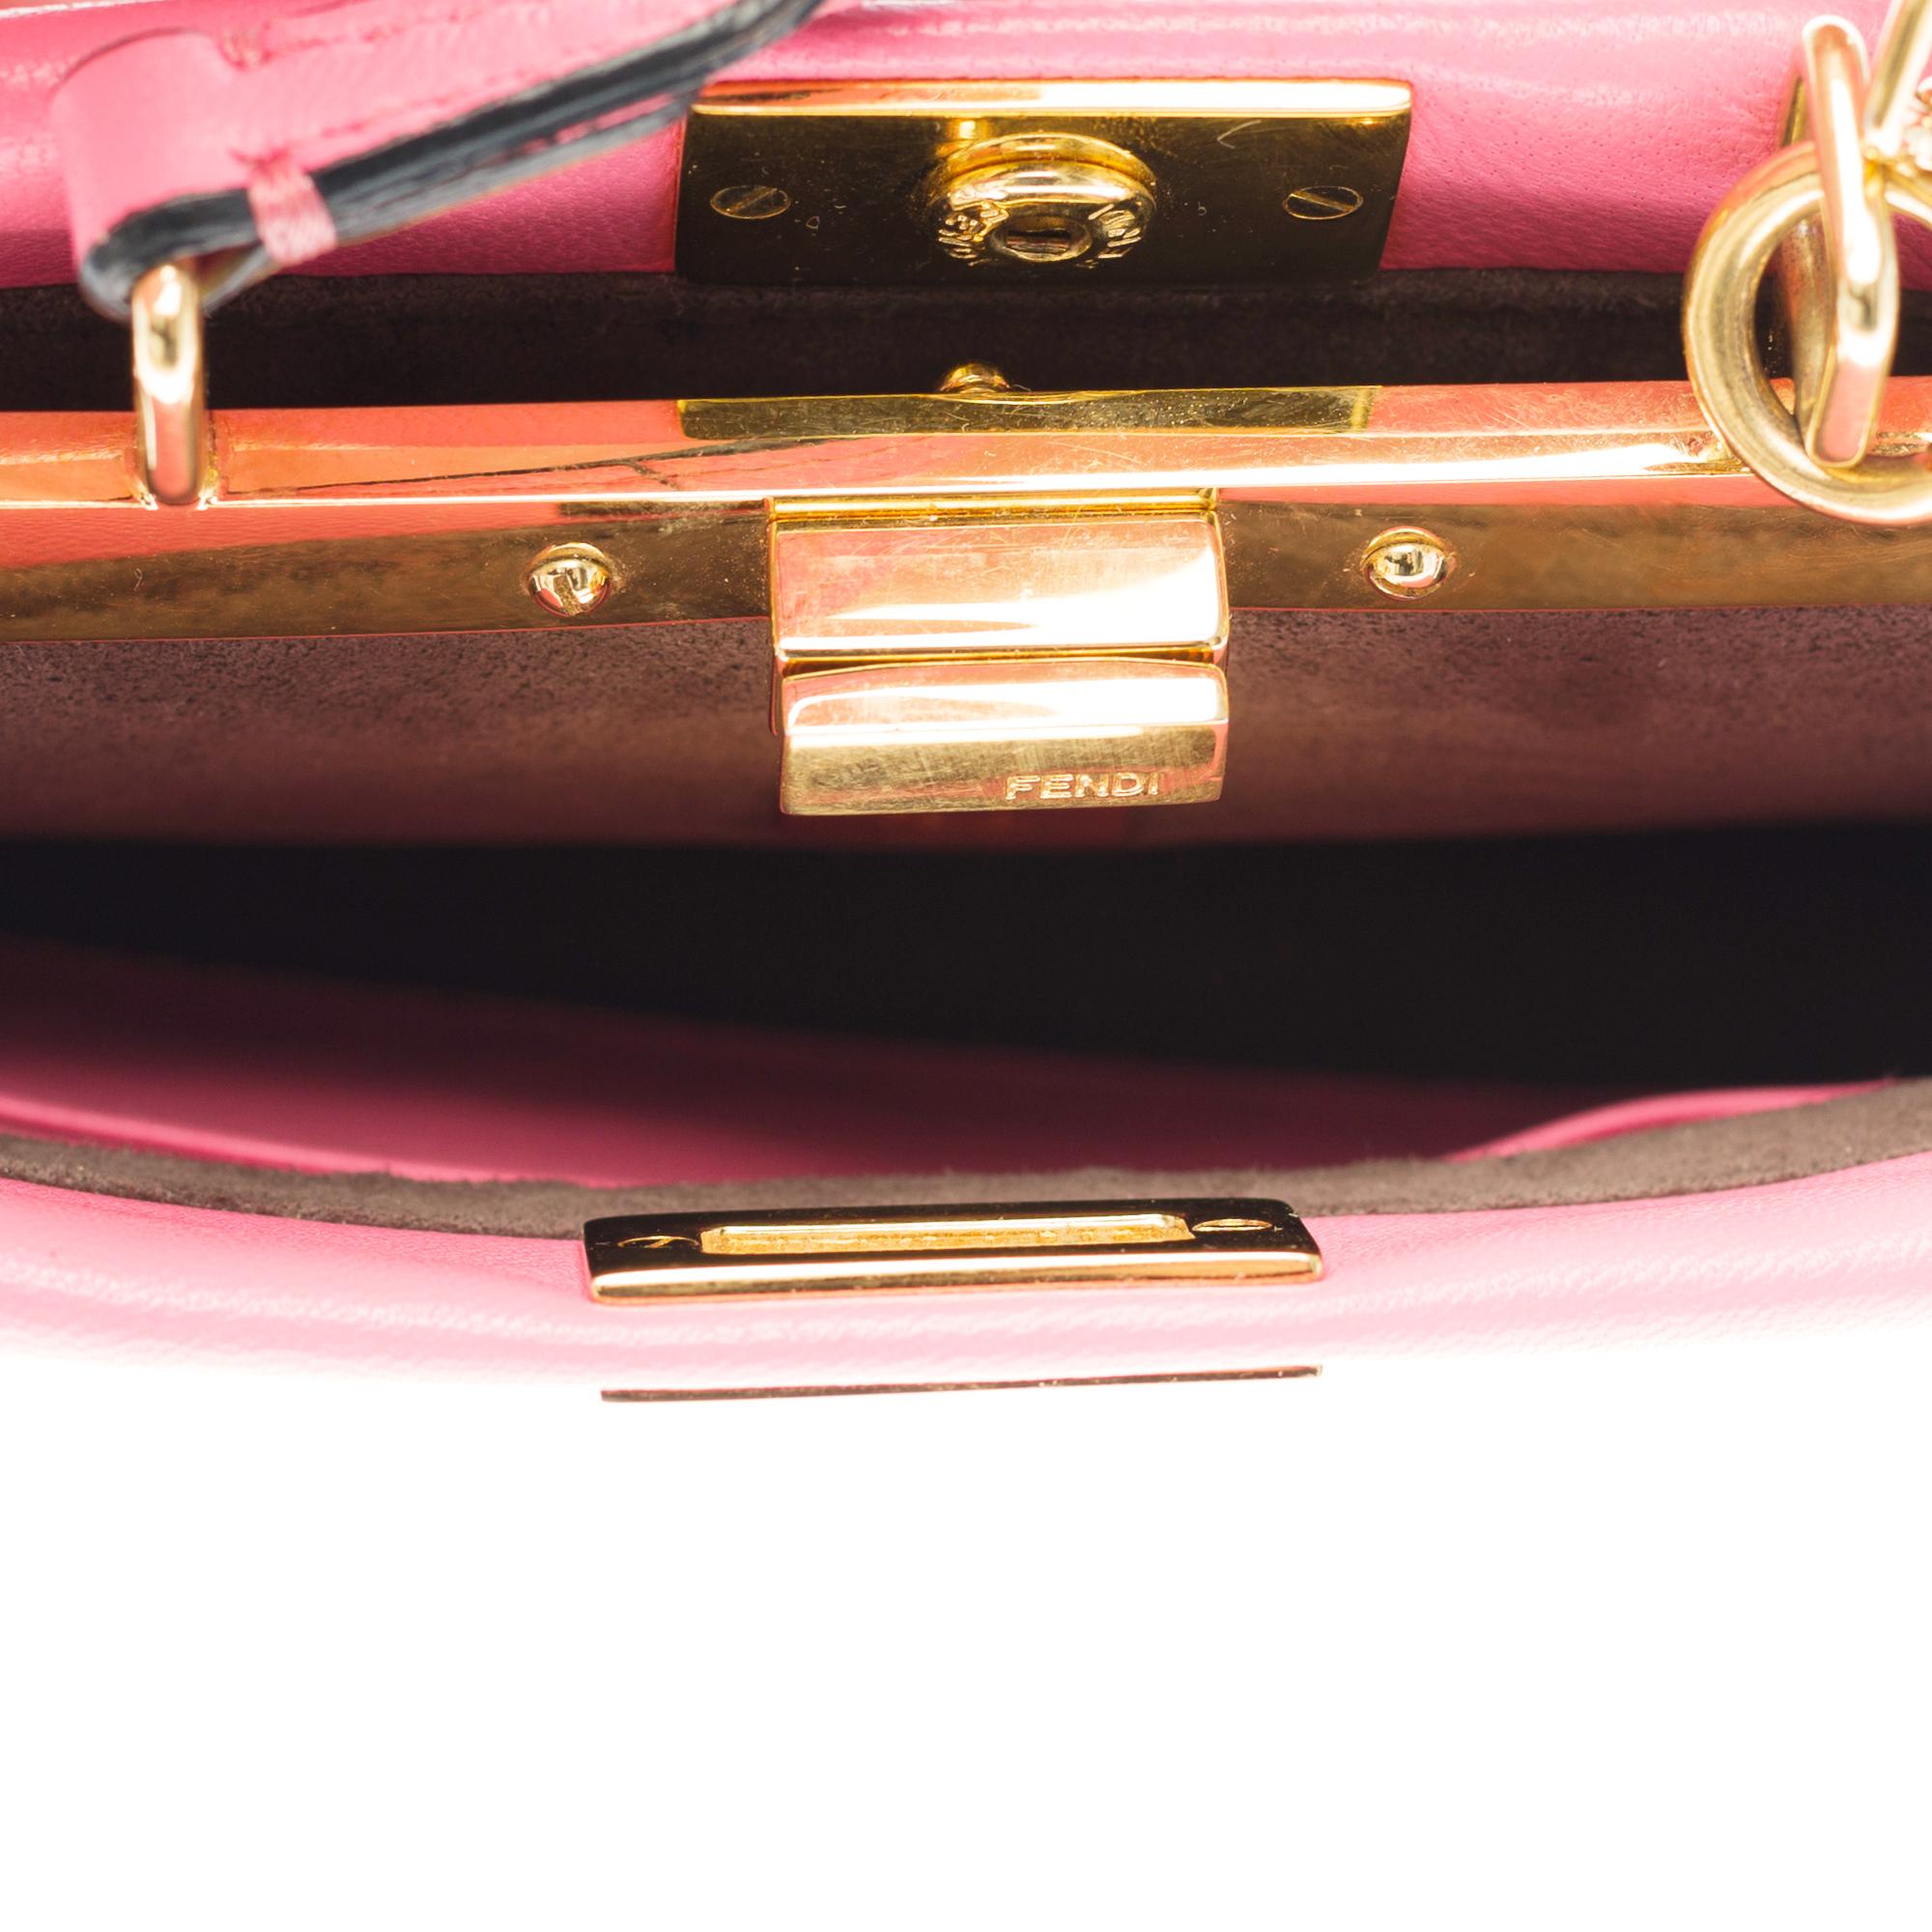 Amazing Fendi Micro Peekaboo shoulder bag in pink leather and gold hardware  2